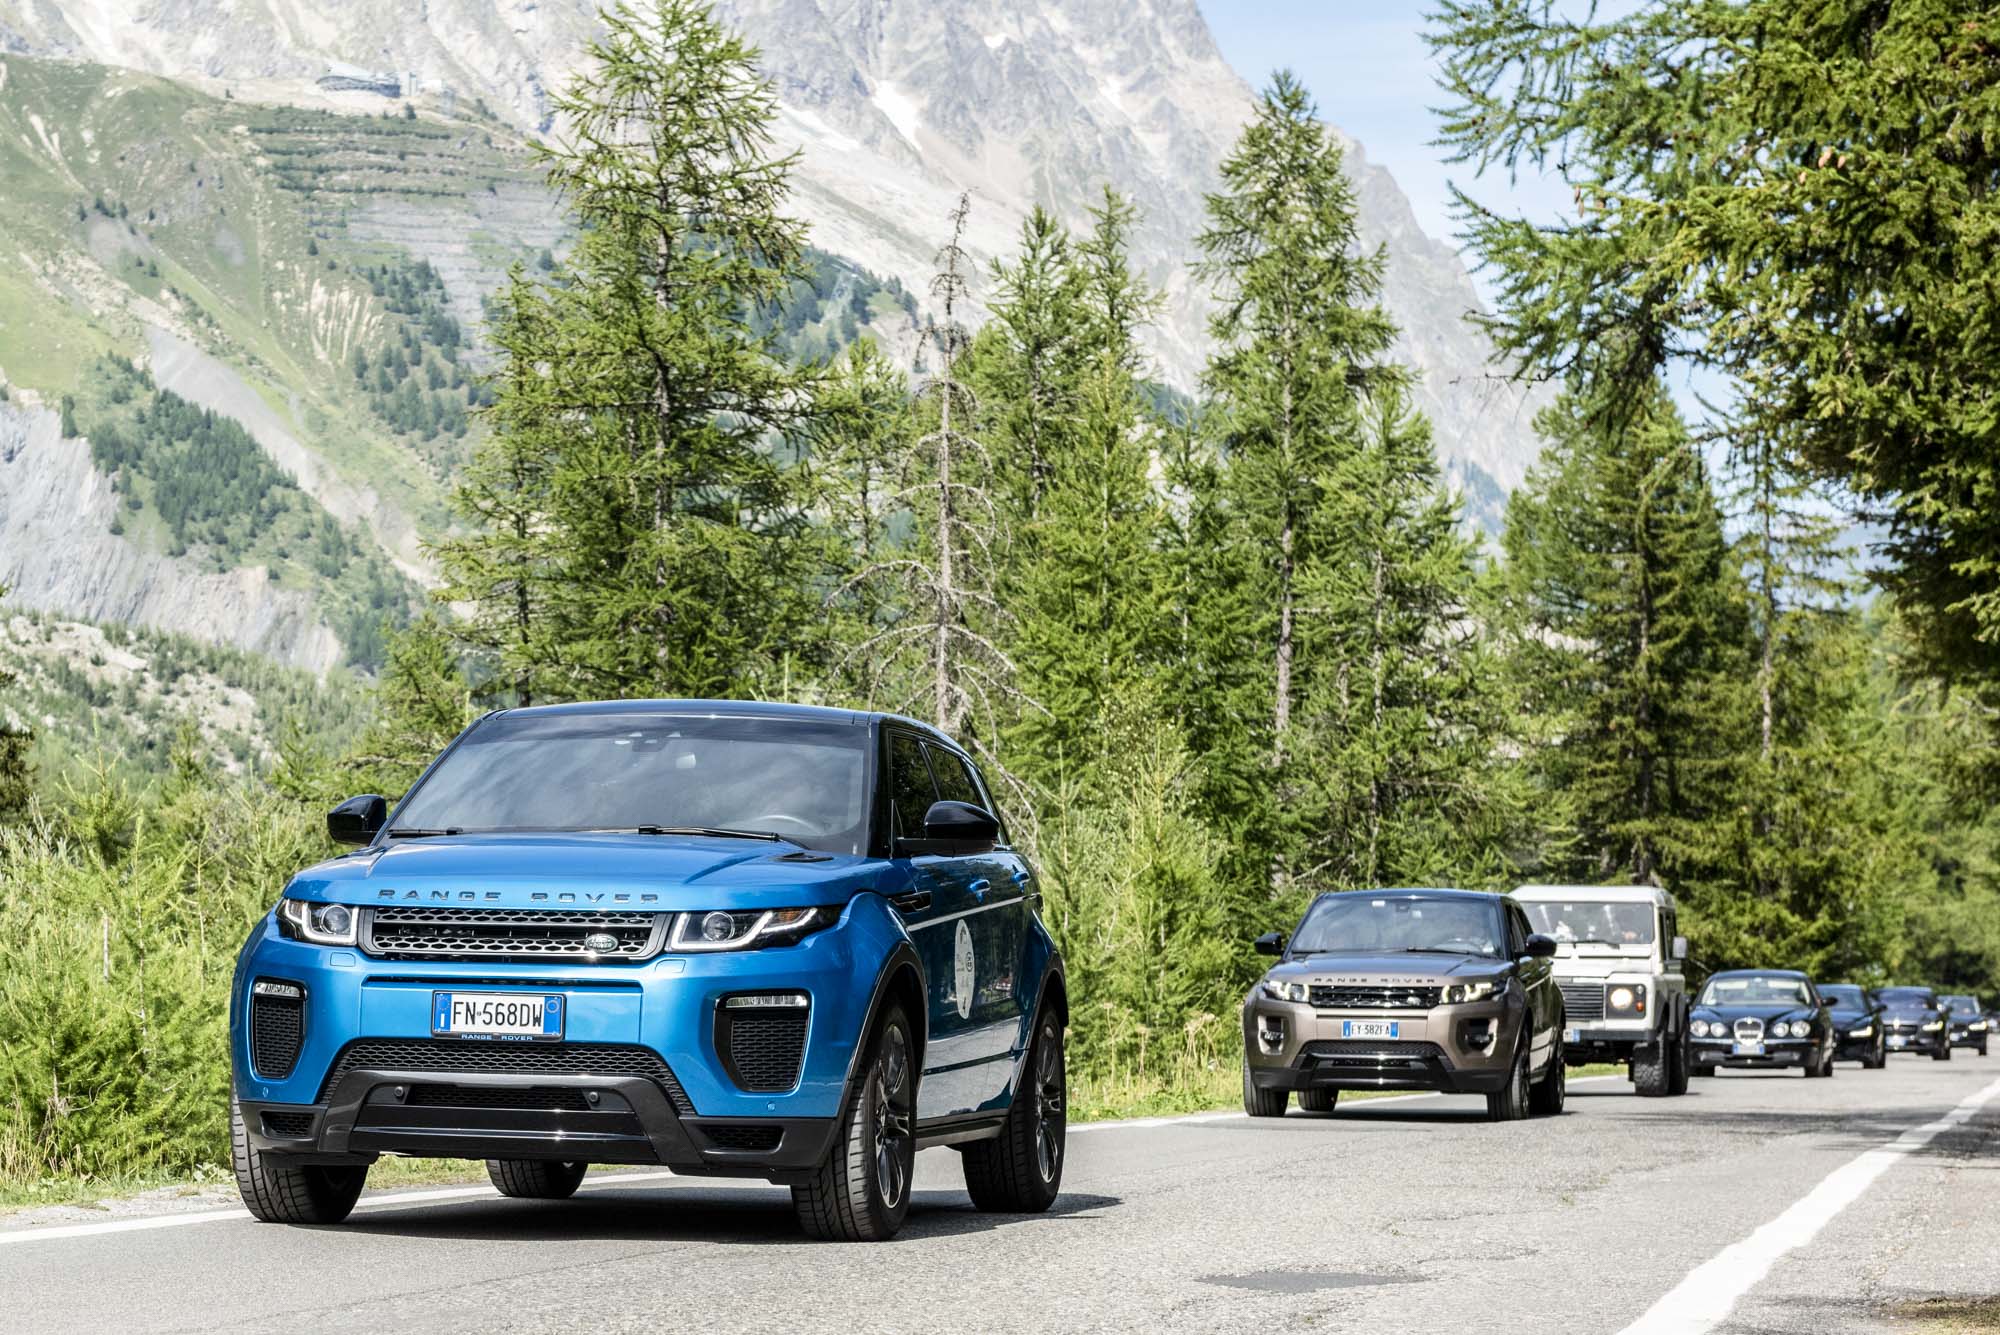 Jaguar Land Rover a Courmayeur per promuovere la bellezza italiana